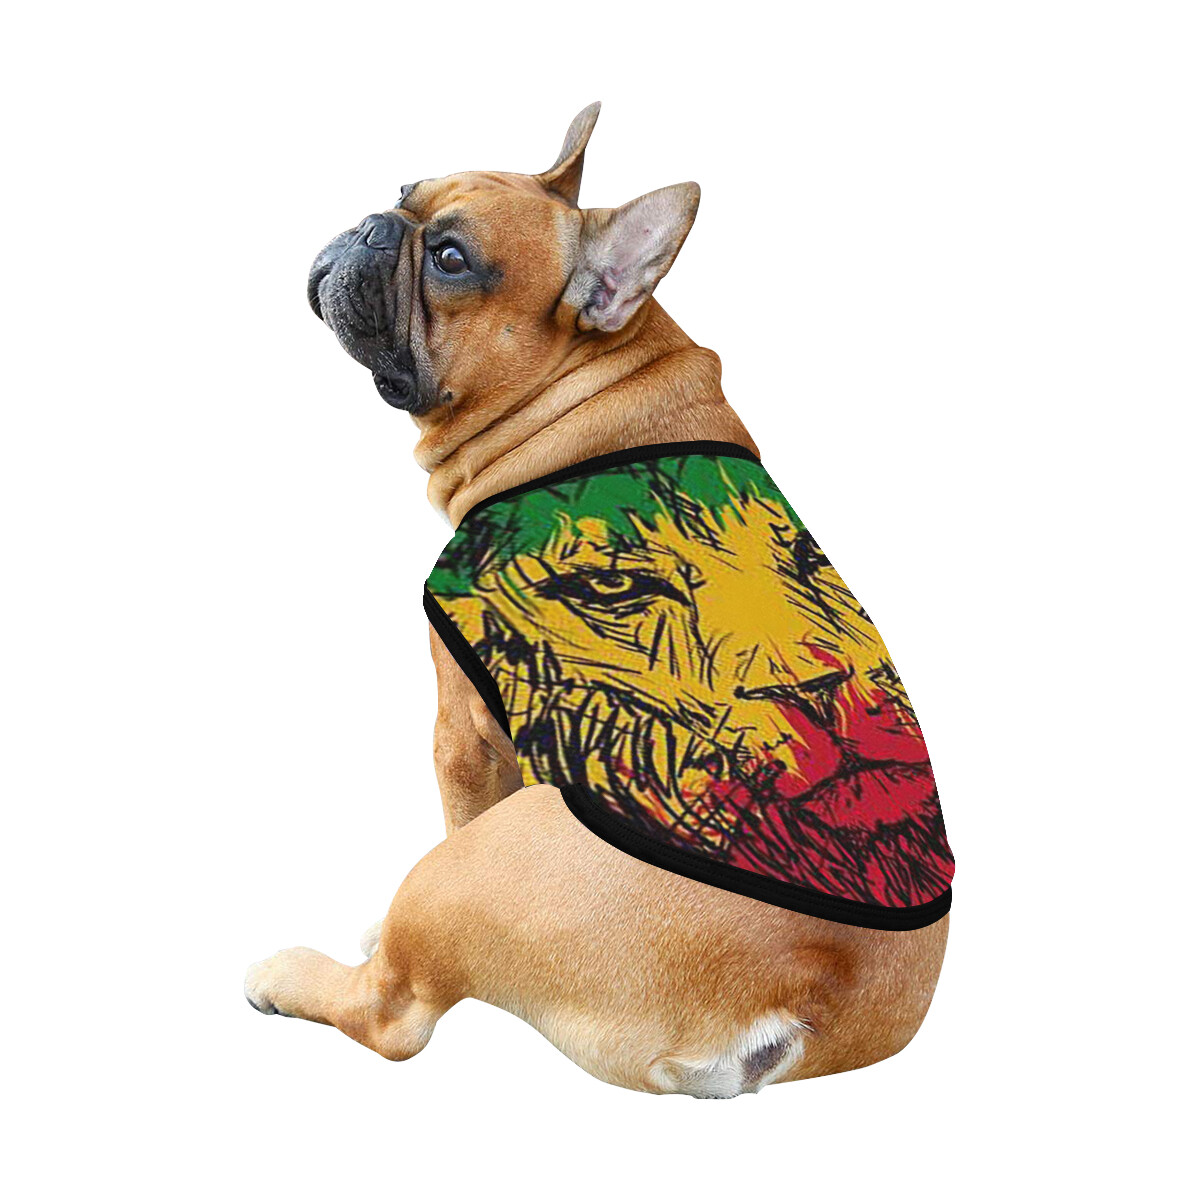 🐕 Rasta Lion Dog Tank Top, Dog shirt, Dog clothes, Gifts, front back print, 7 sizes XS to 3XL, rasta flag, rasta dog shirt, rasta dog t-shirt, black